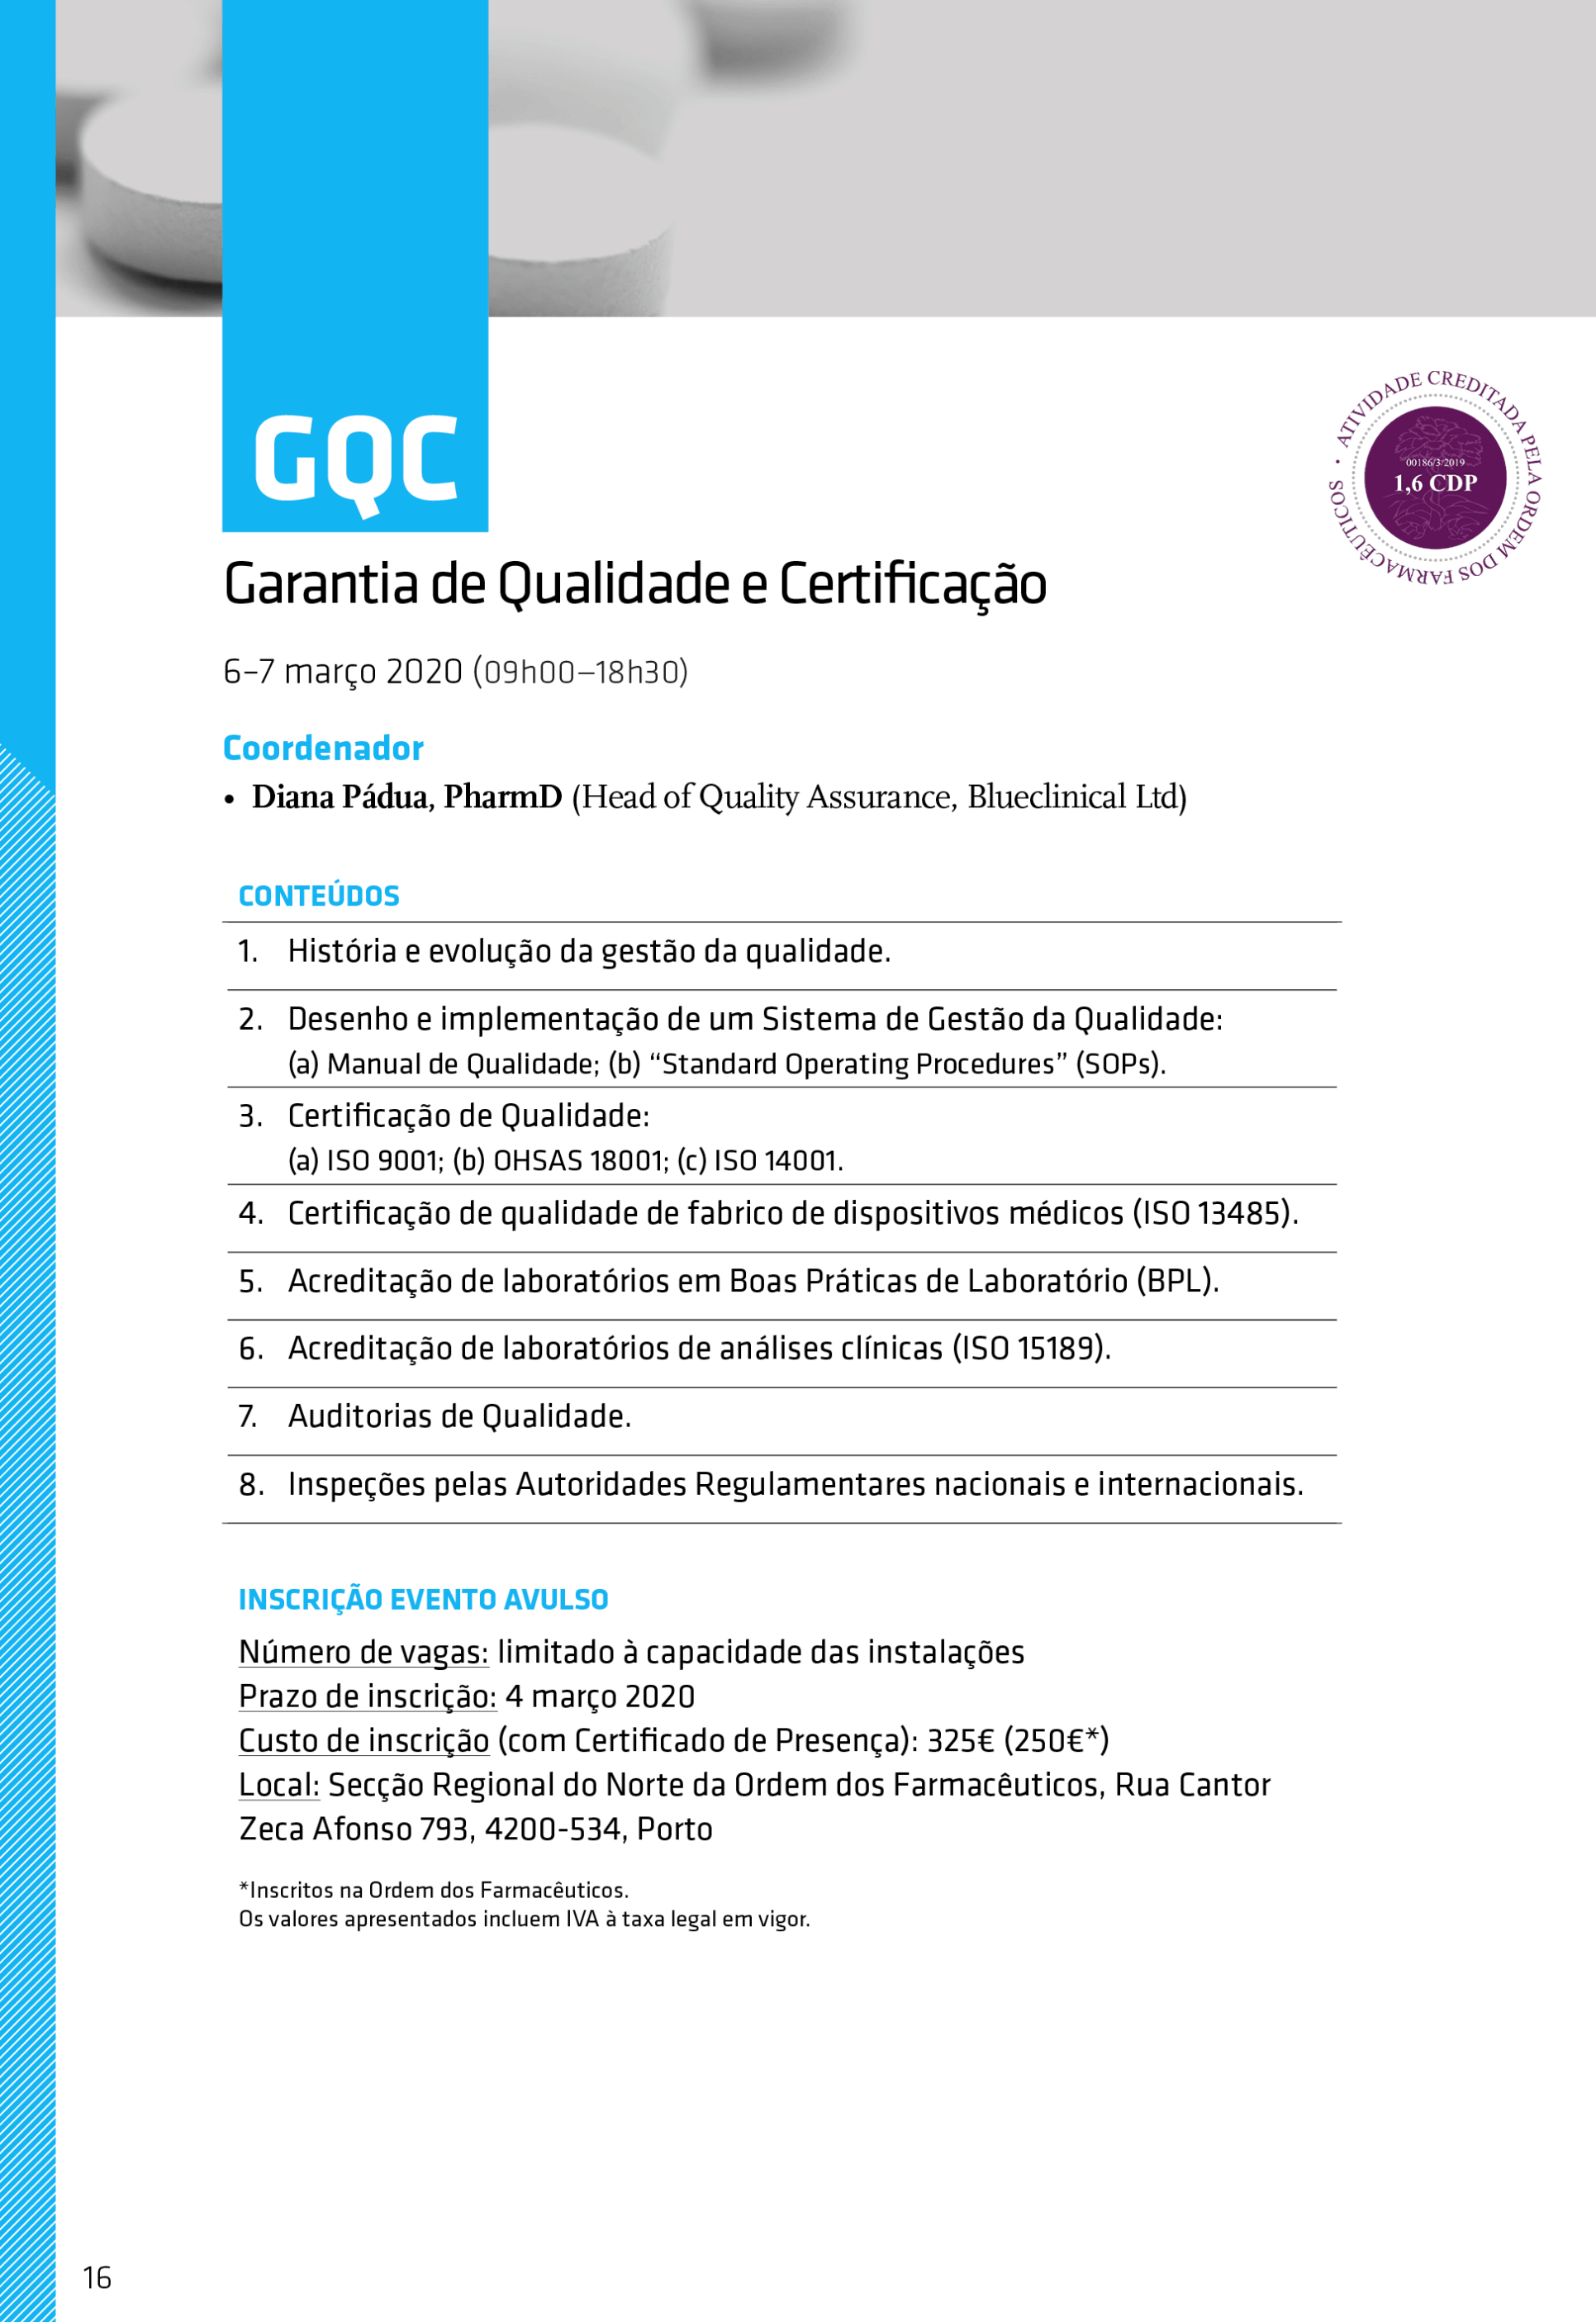 GQC - Programa